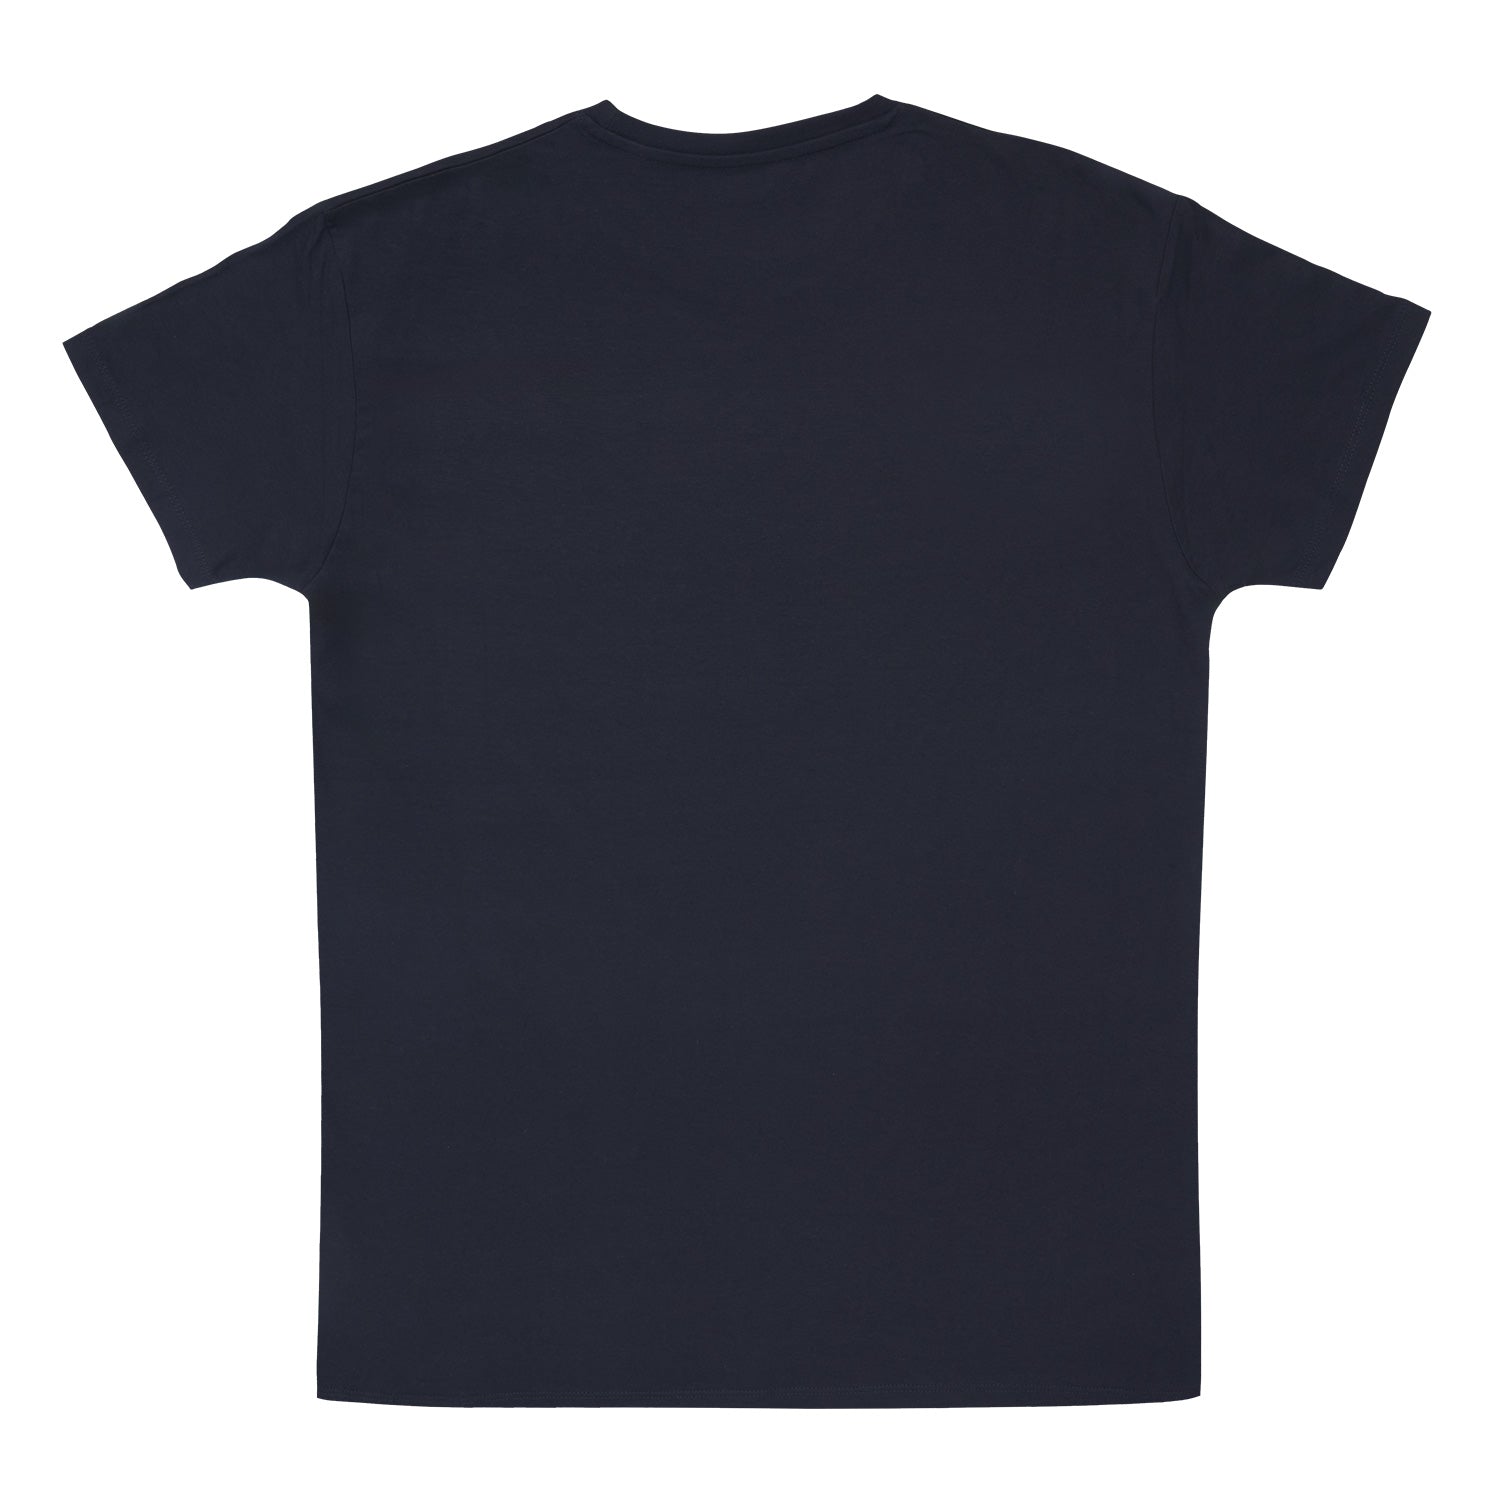 GONG | Tee-Shirt Flame Ball Homme Coton Bio